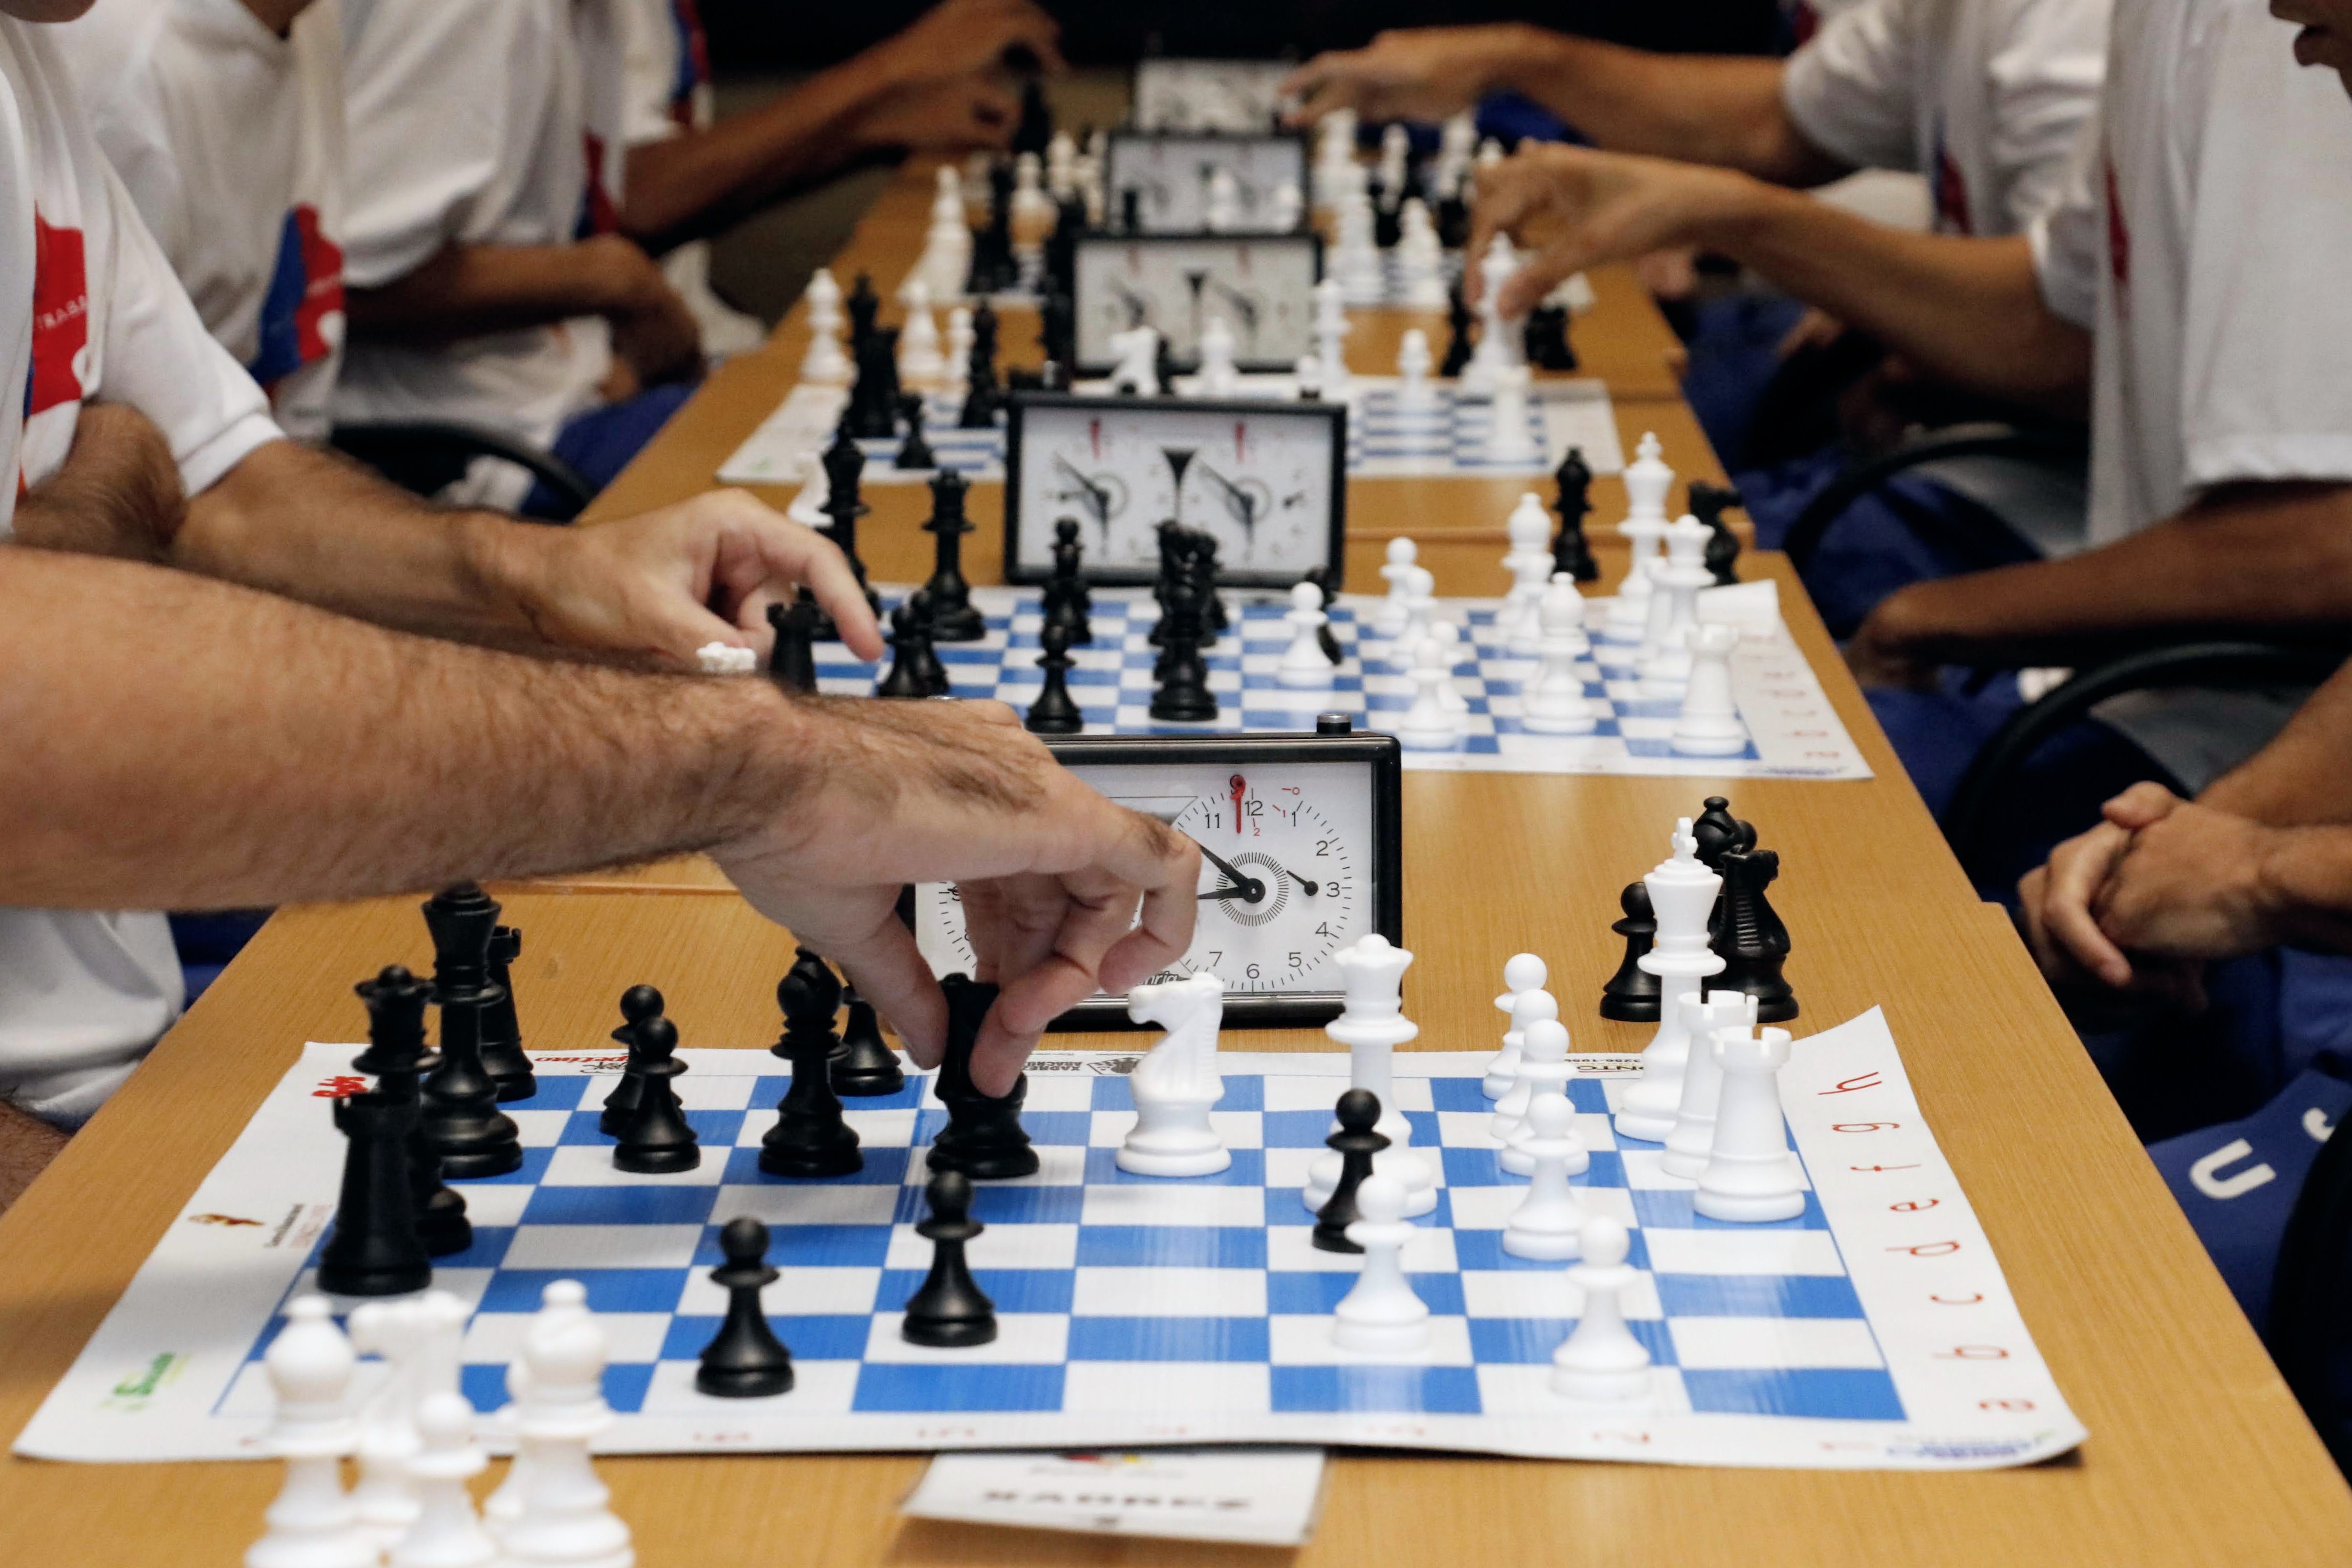 Coronavírus afetando eventos de xadrez pelo mundo todo - Xadrez Forte